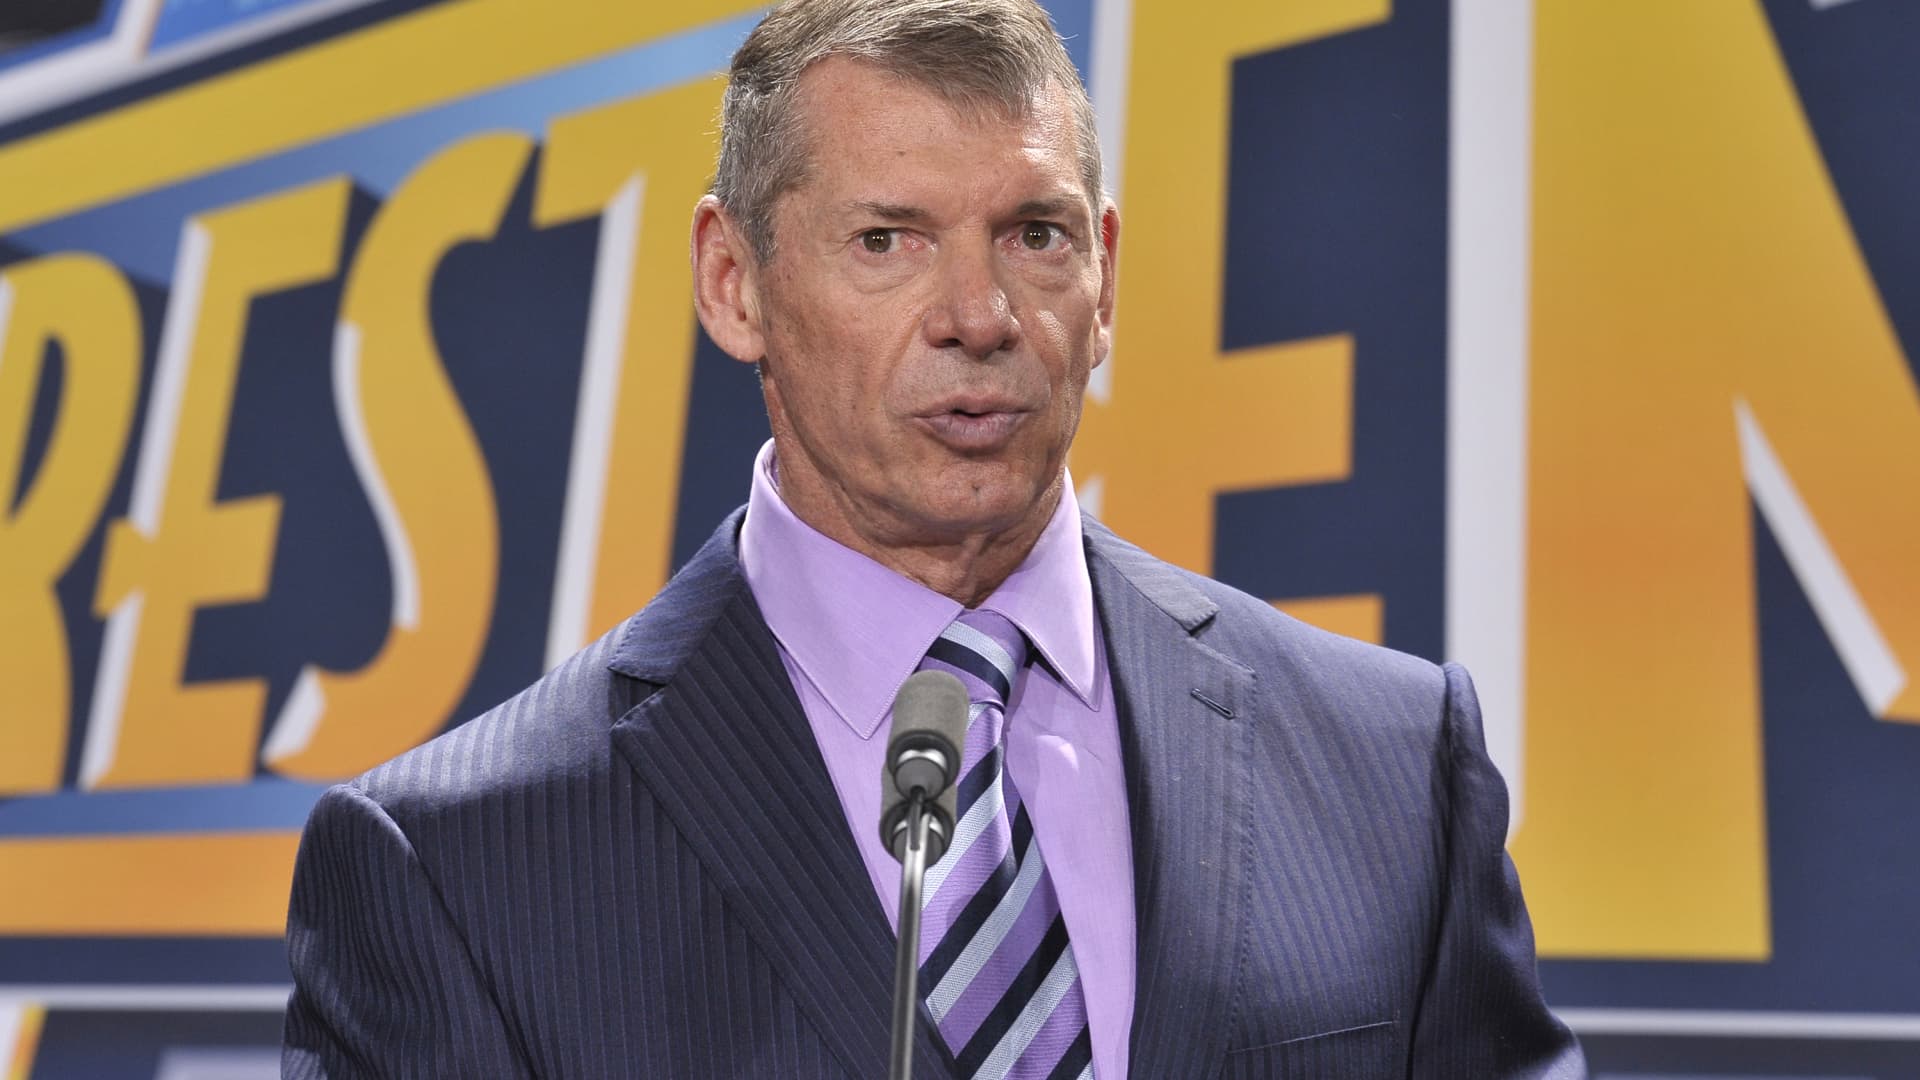 WWE board investigates secret $3 million hush price by CEO Vince McMahon, picture says